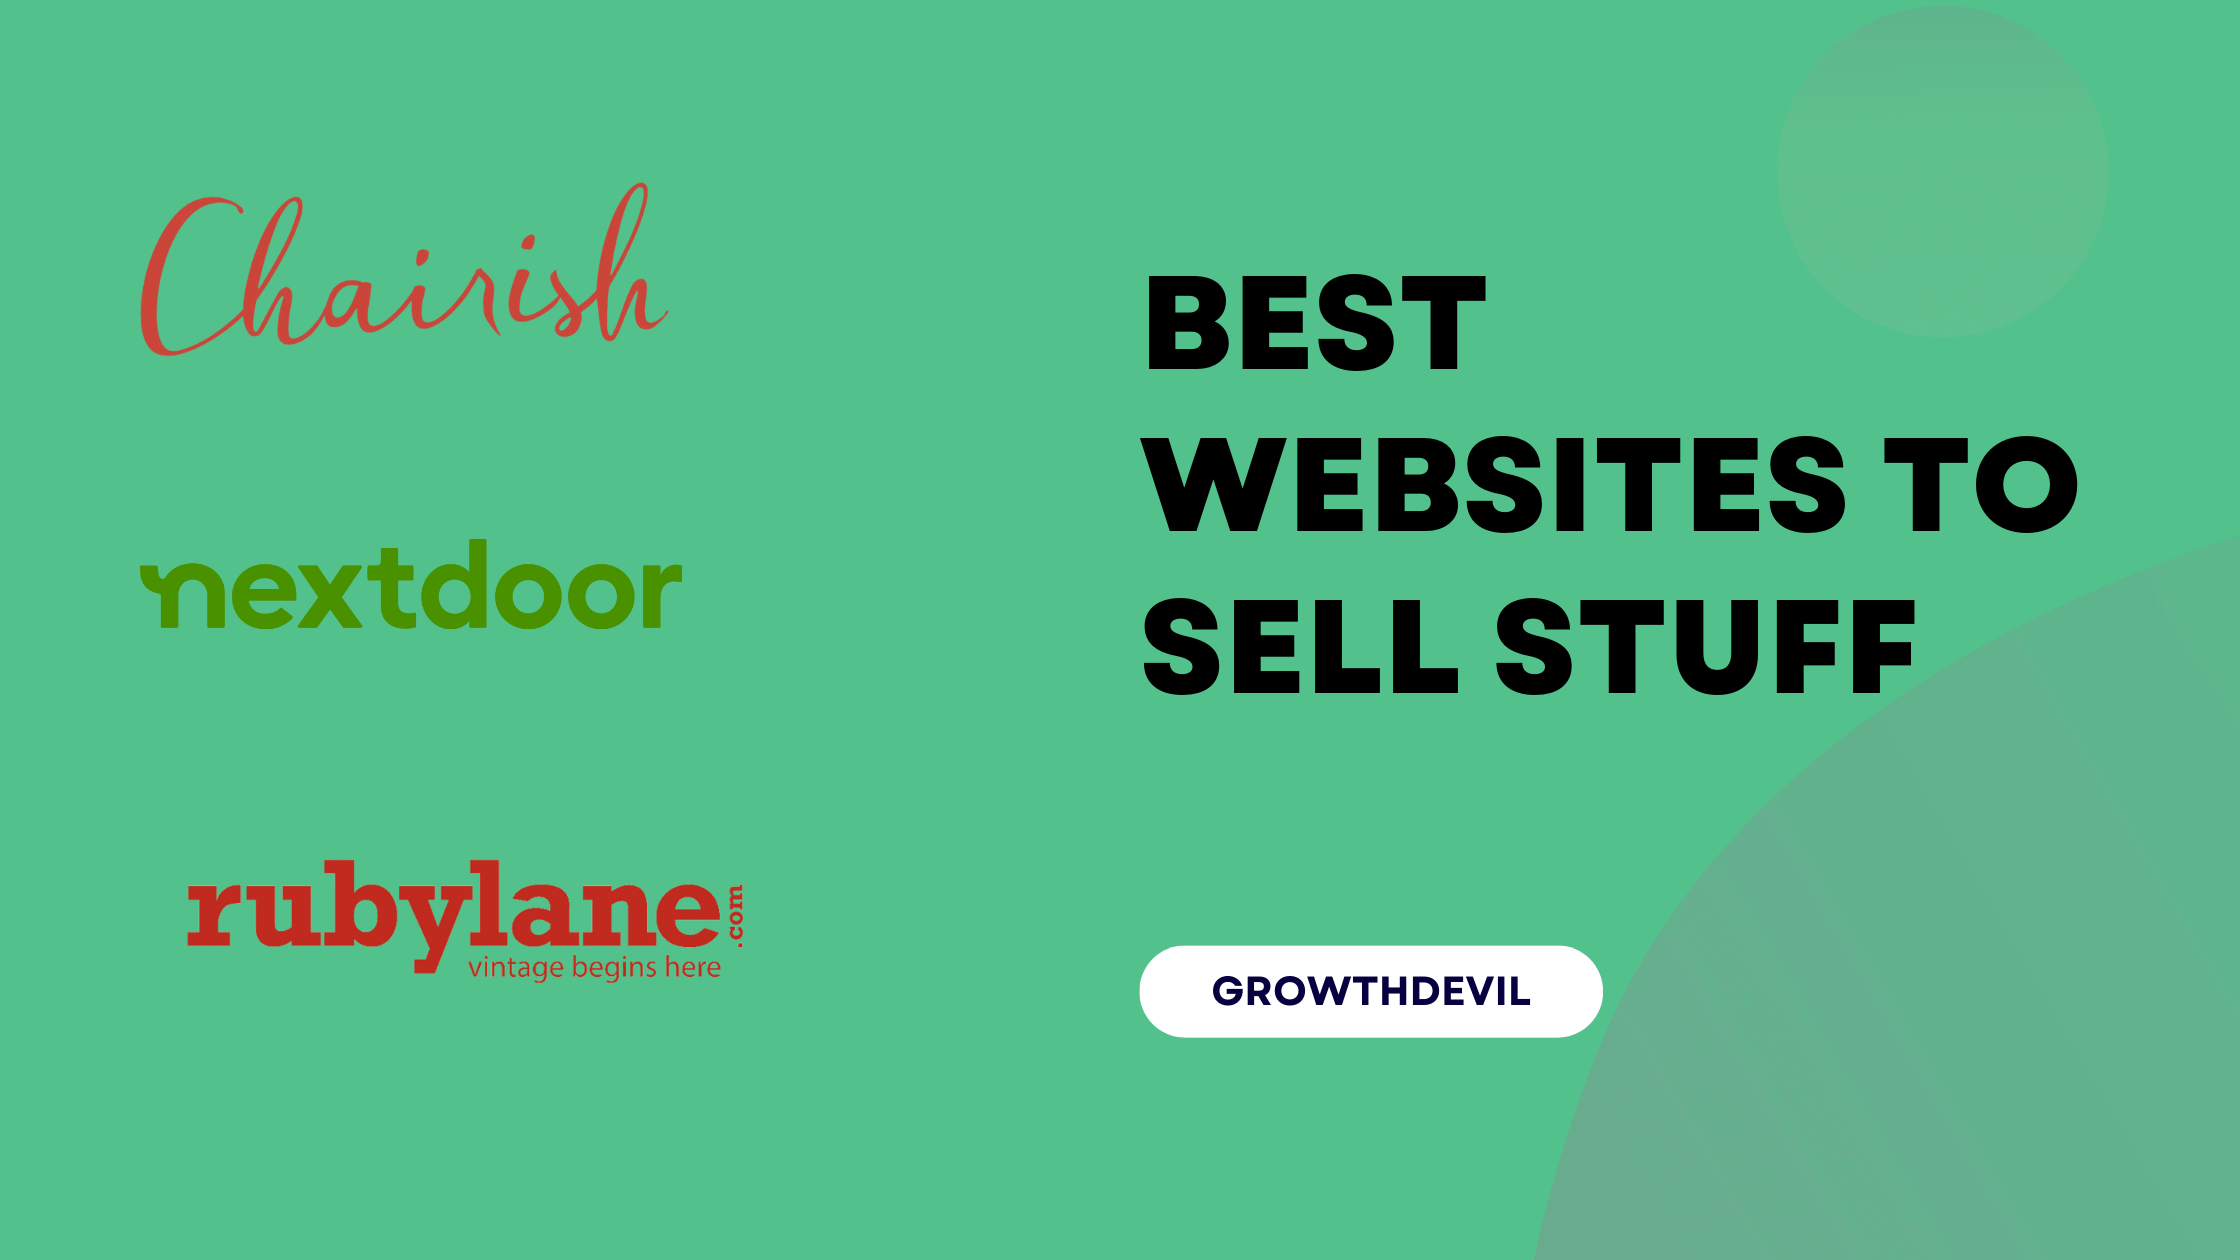 Best Websites To Sell Stuff - GrowthDevil